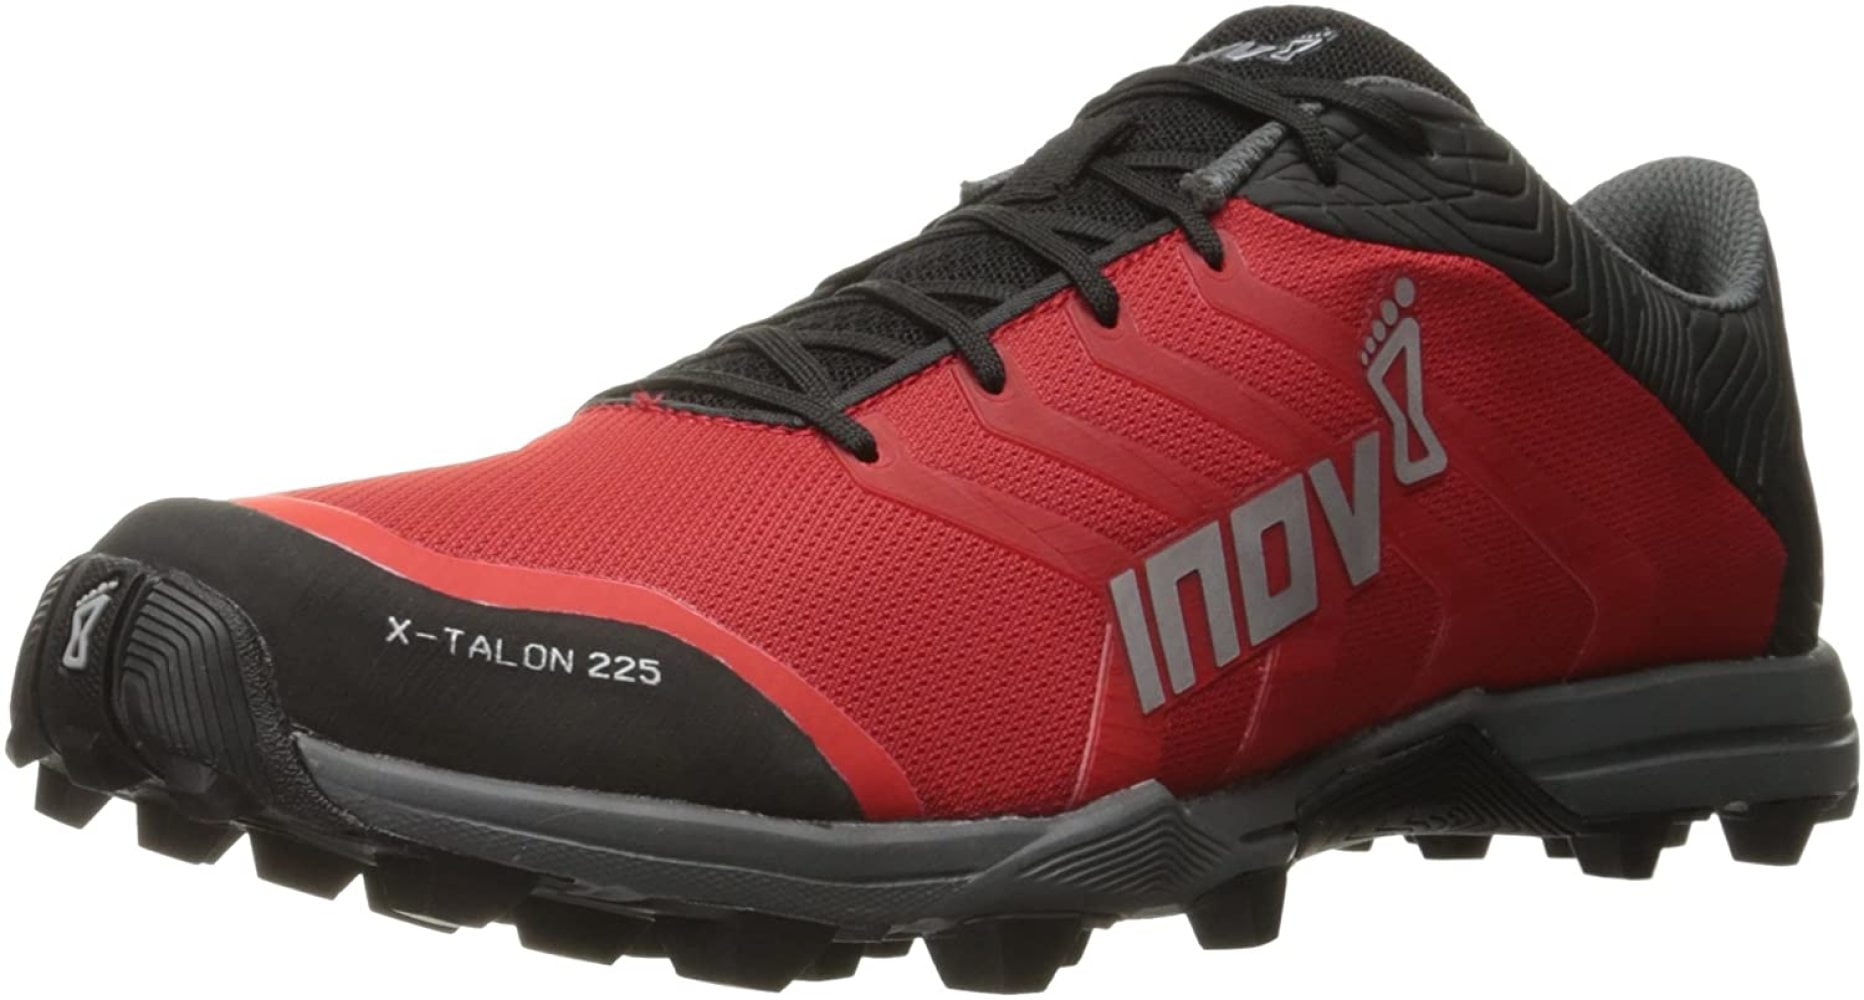 Inov8 X-Talon 225 Unisex Grey Trail Running Road Sports Shoes Trainers Pumps 